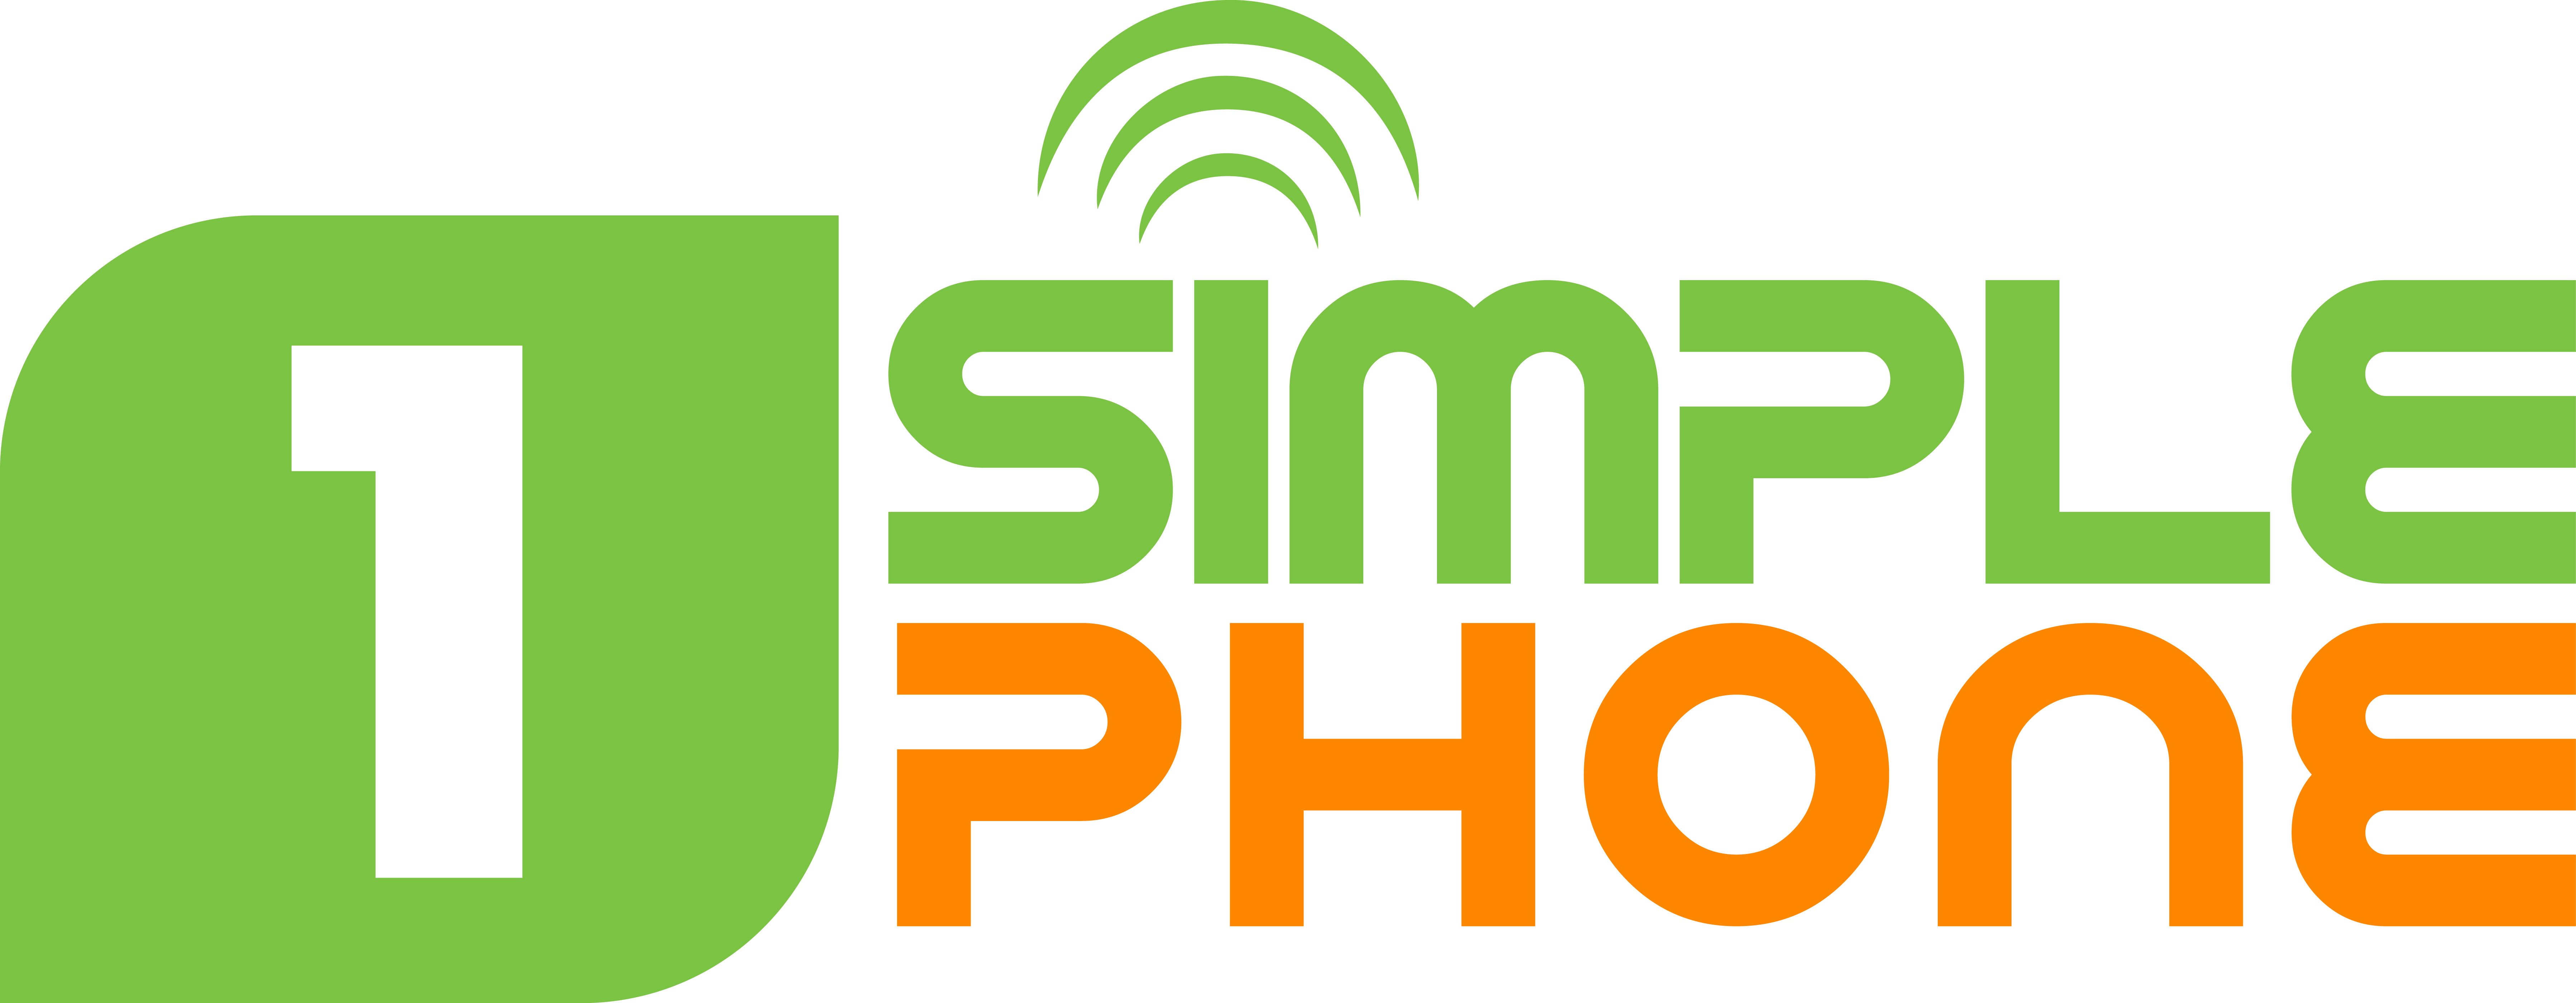 1simplephone-logo-t